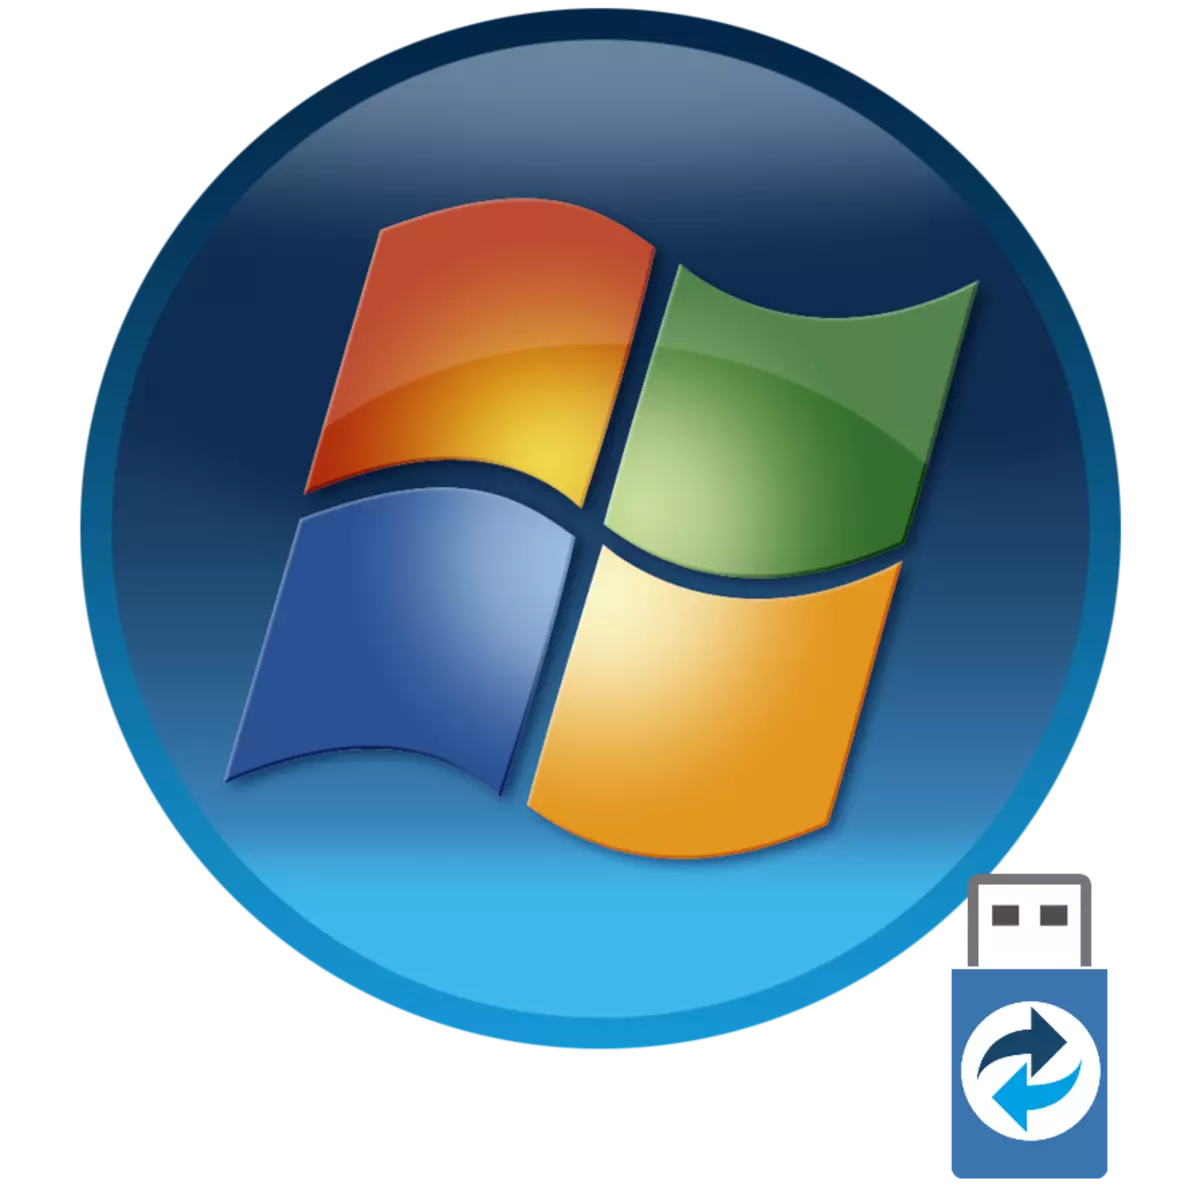 Cargando Windows 7 desde a unidade de arranque